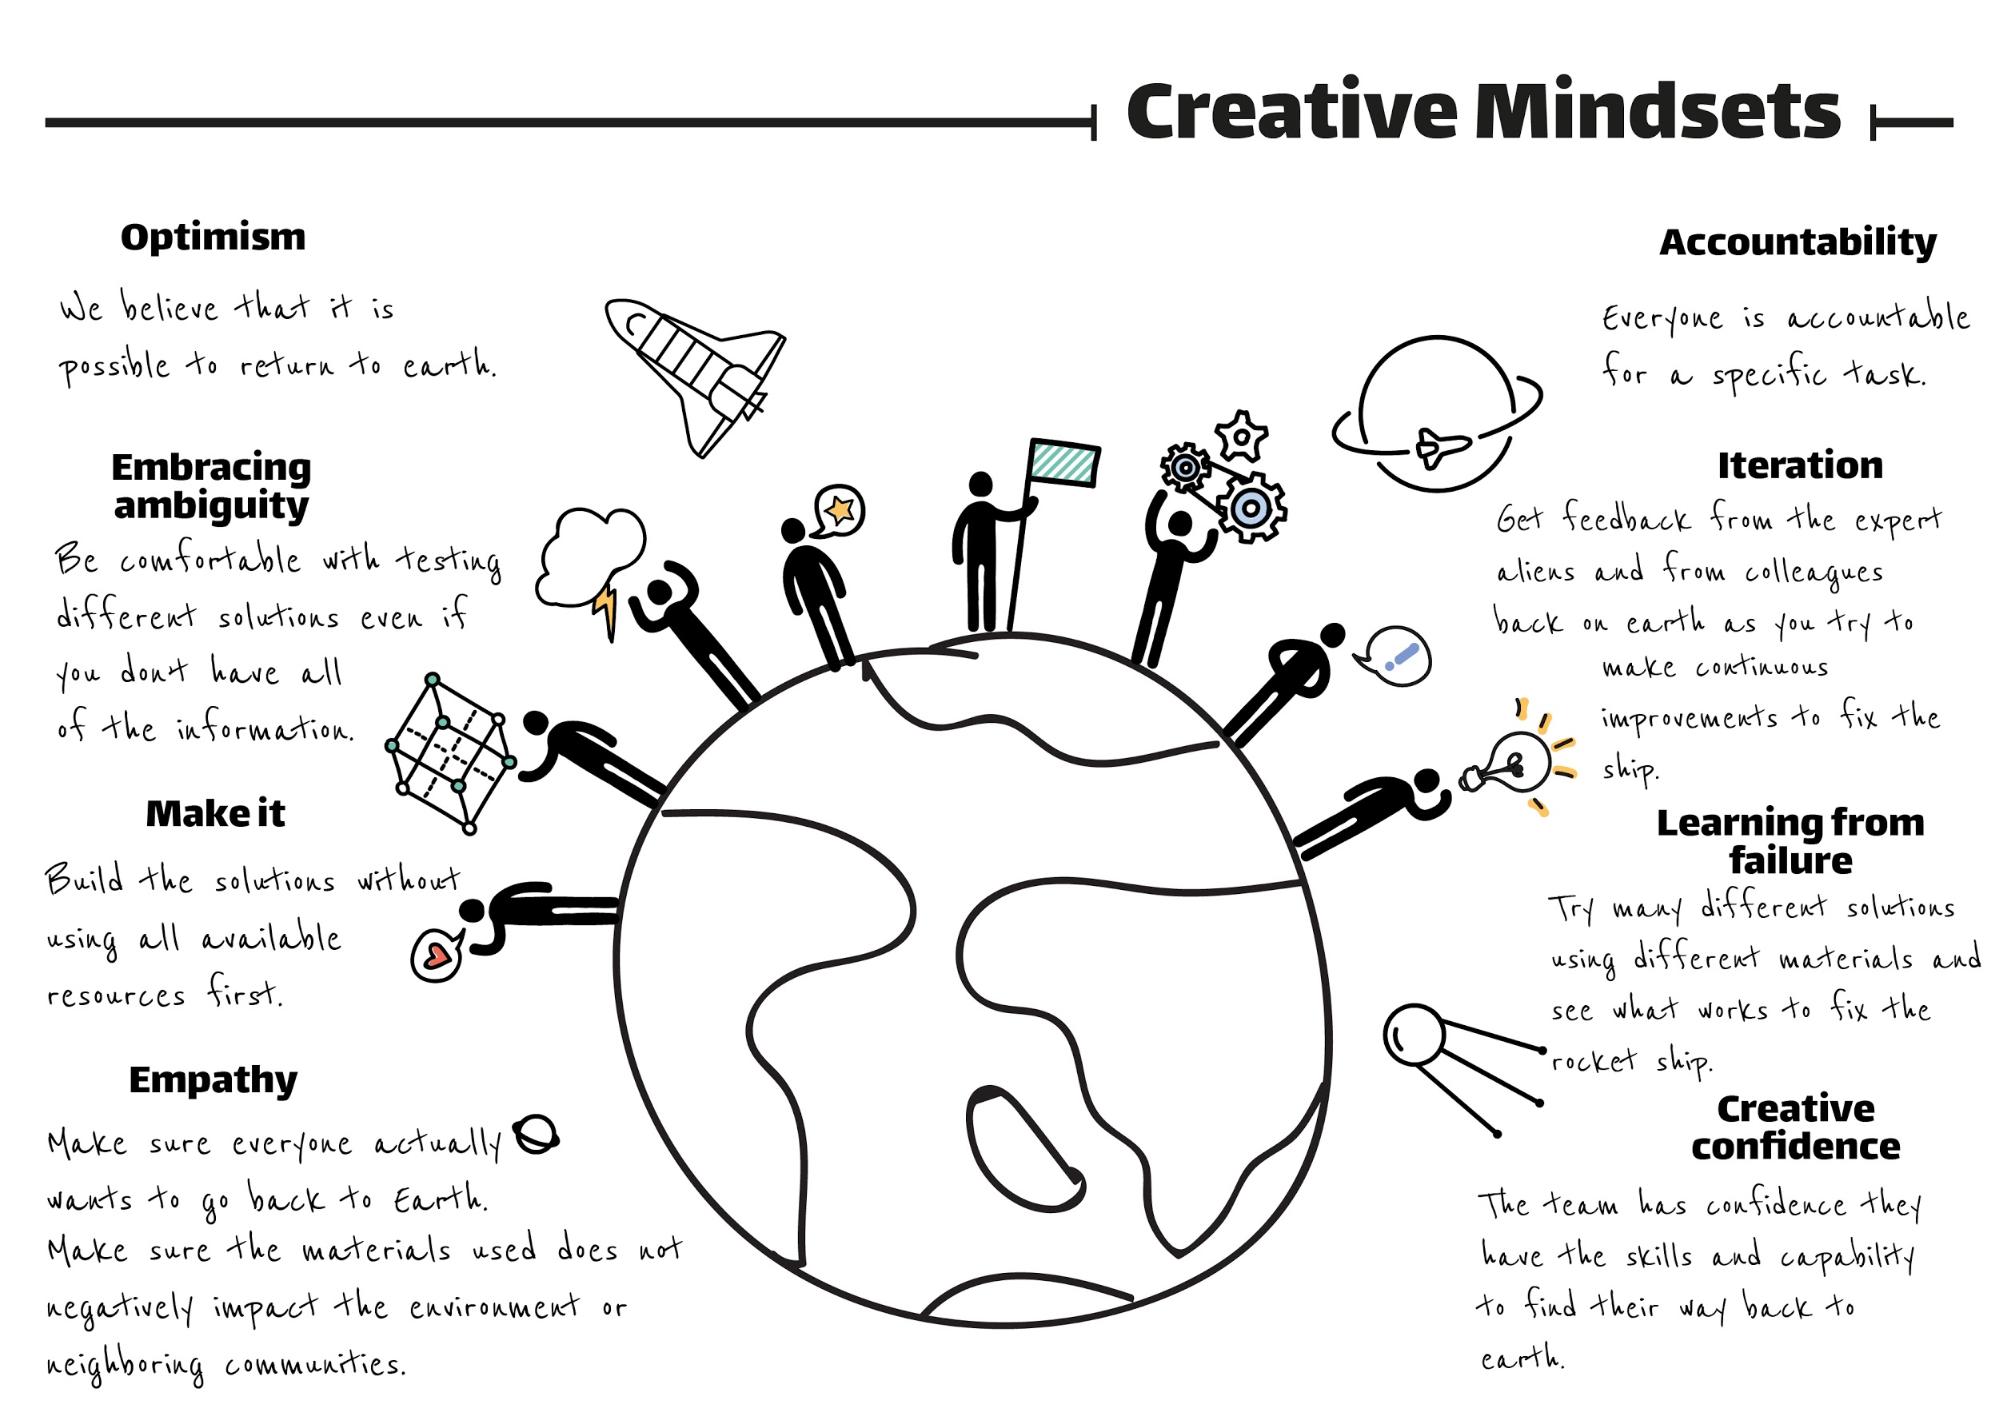 Creative Mindsets image